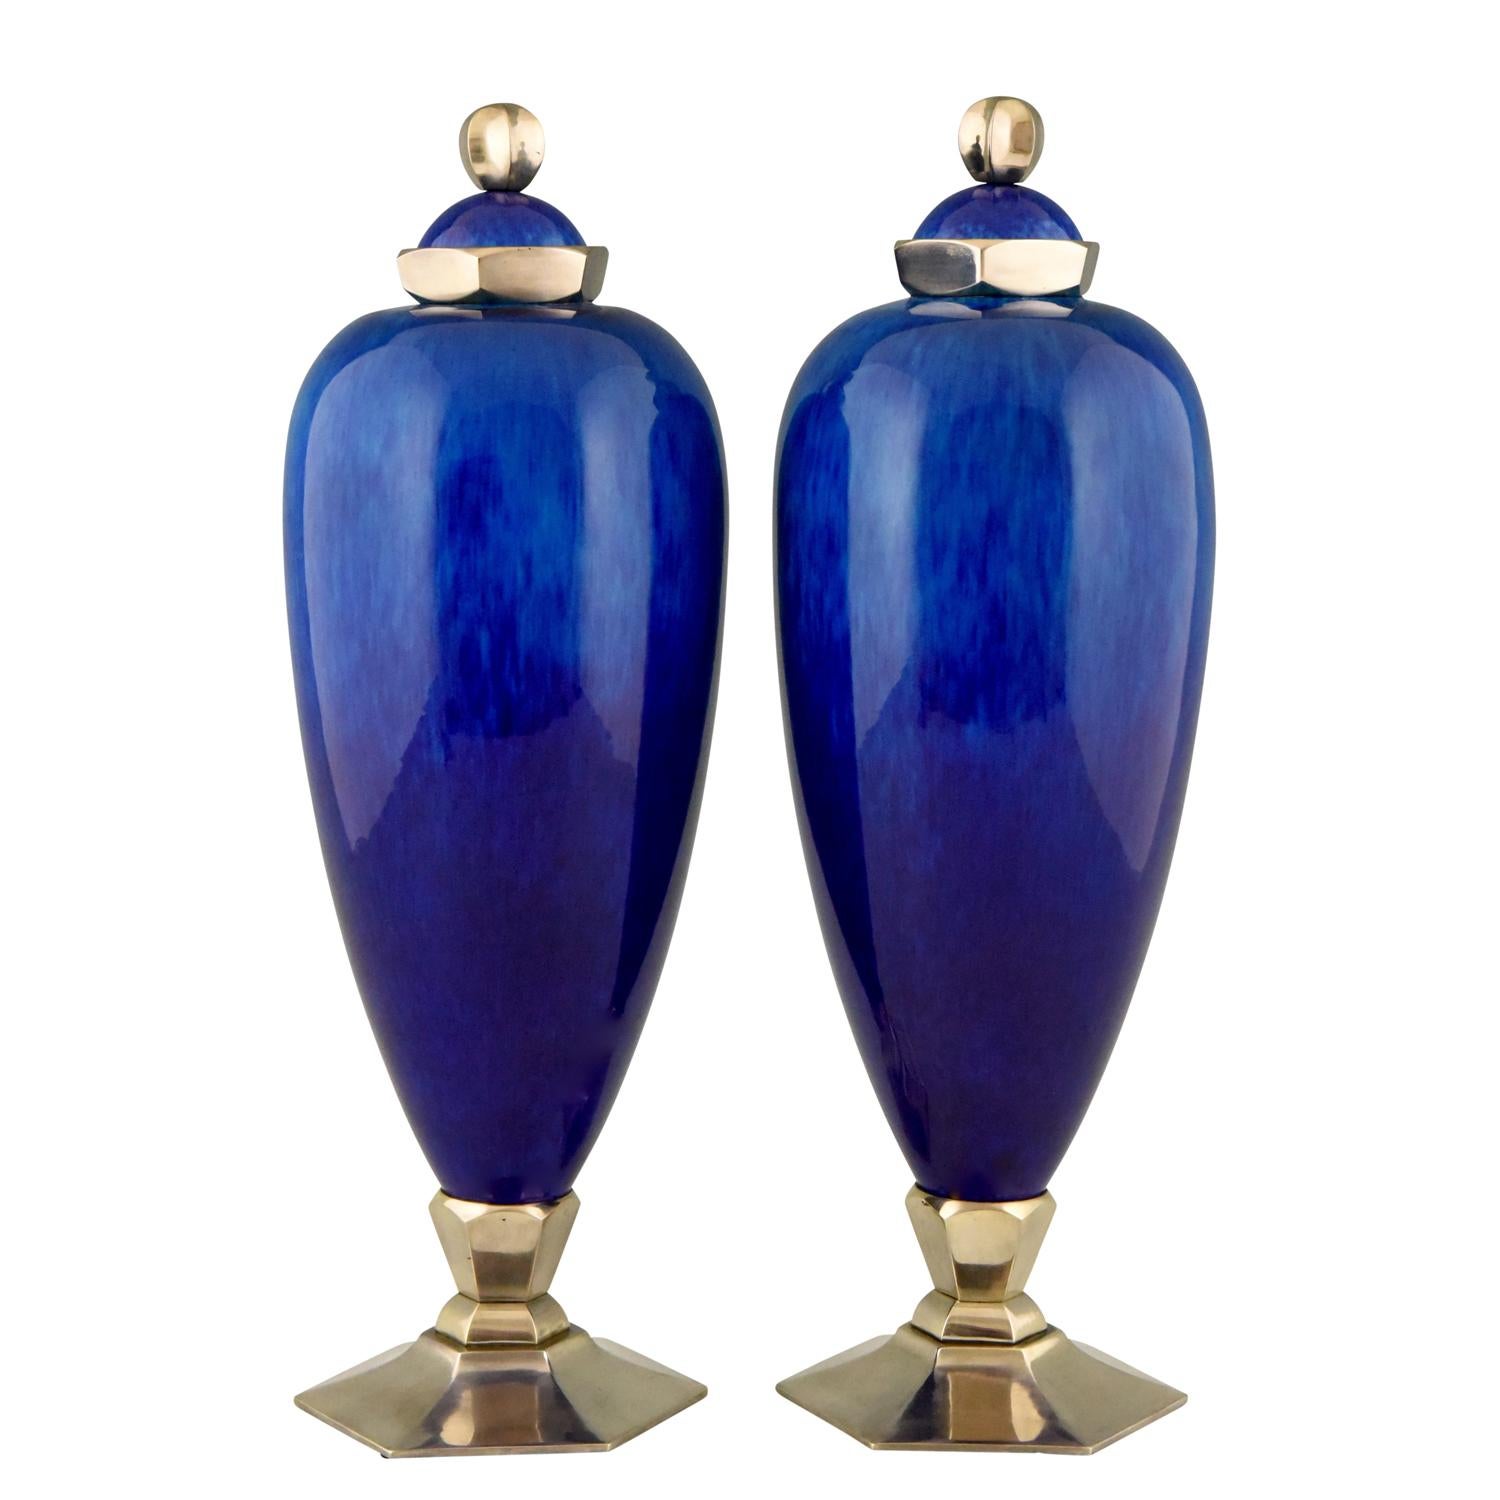 Pair of Art Deco Blue Ceramic Vases or Urns Paul Milet for Sèvres France, 1925